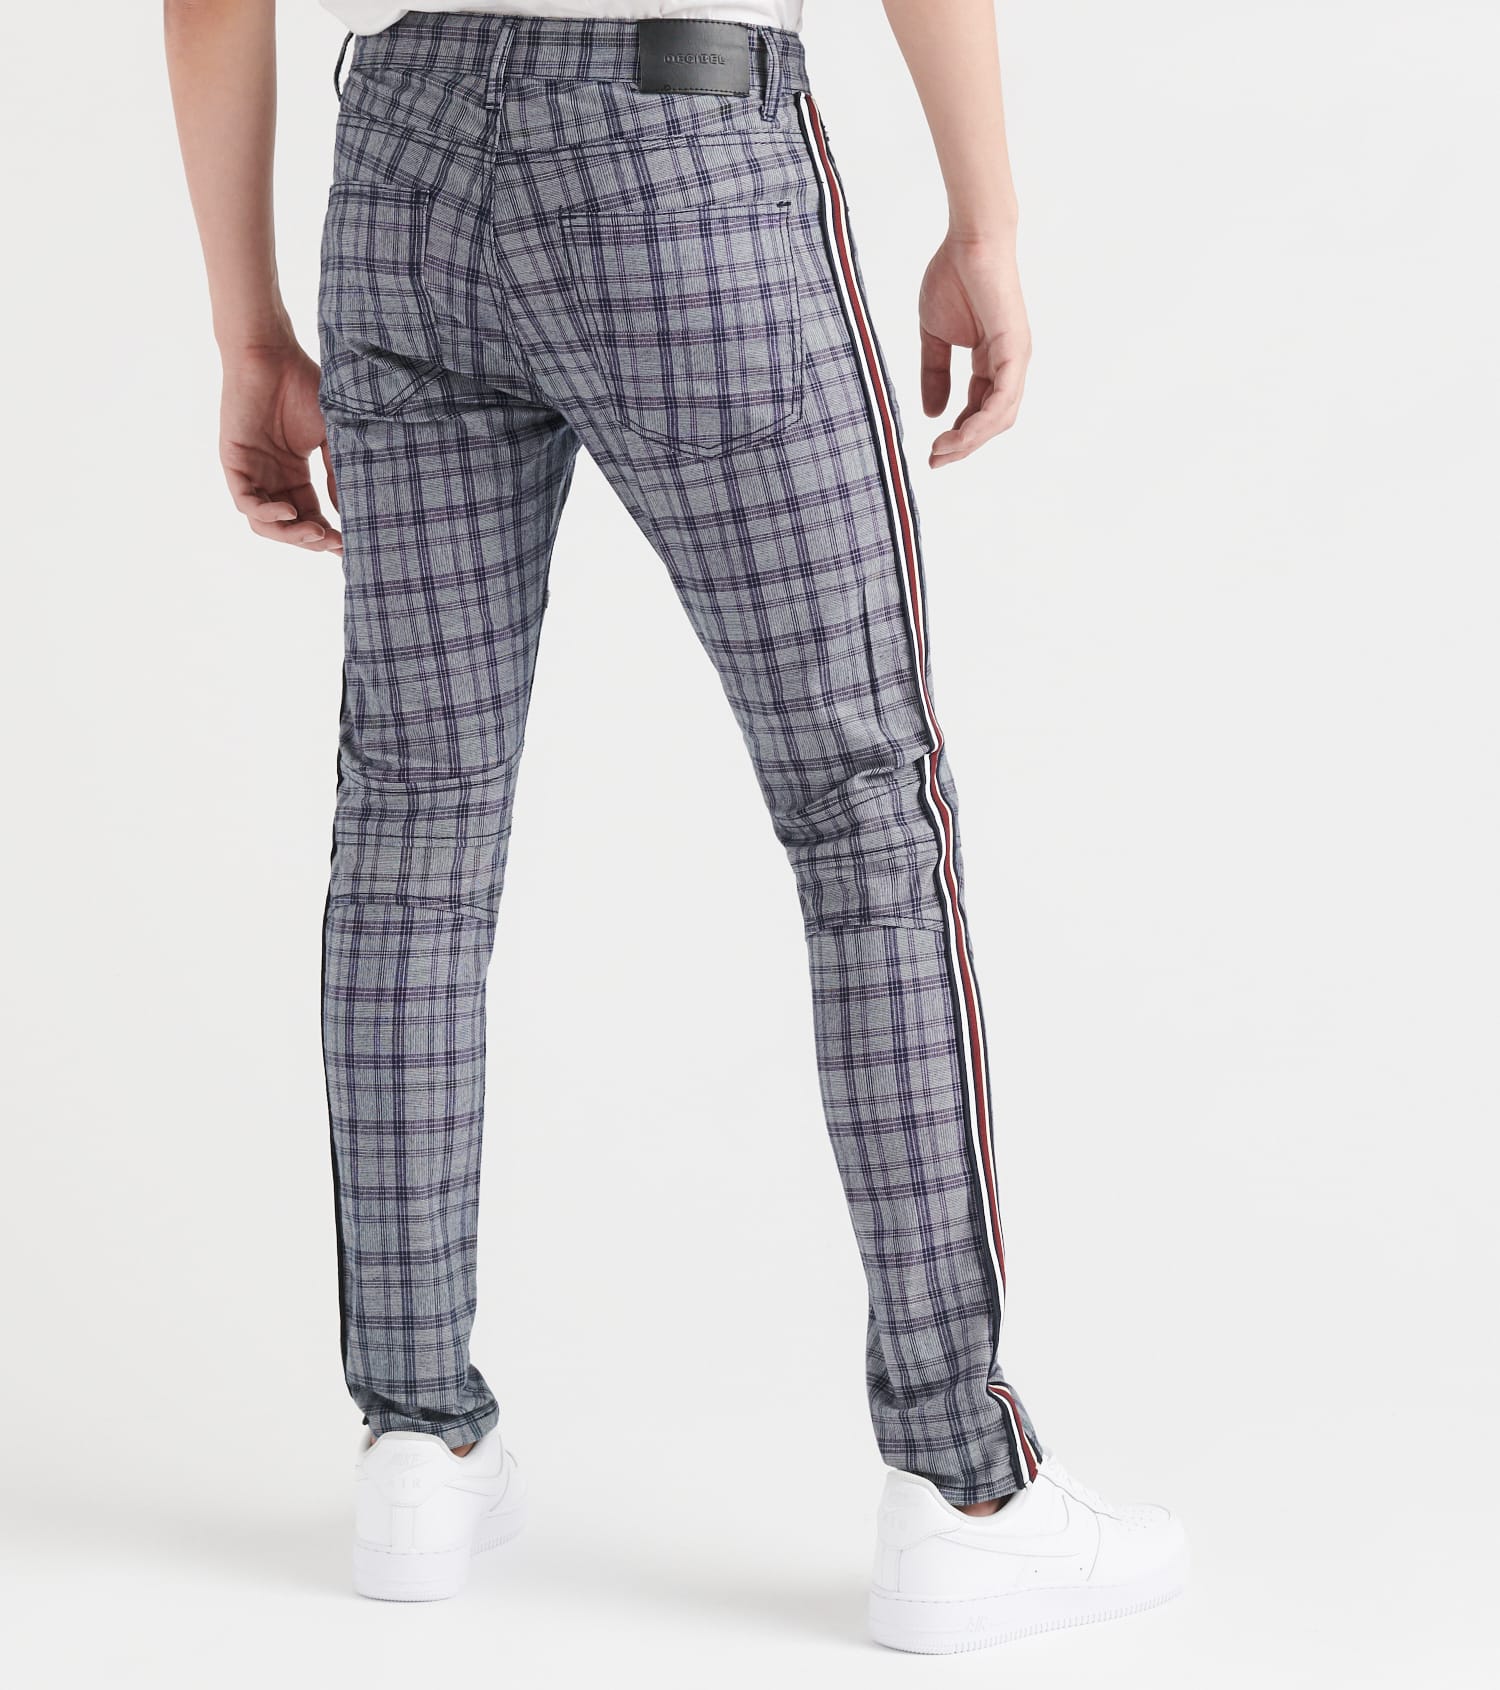 Decibel Plaid Pants With Taping Pant (Grey) - DECWB211-GRY | Jimmy Jazz